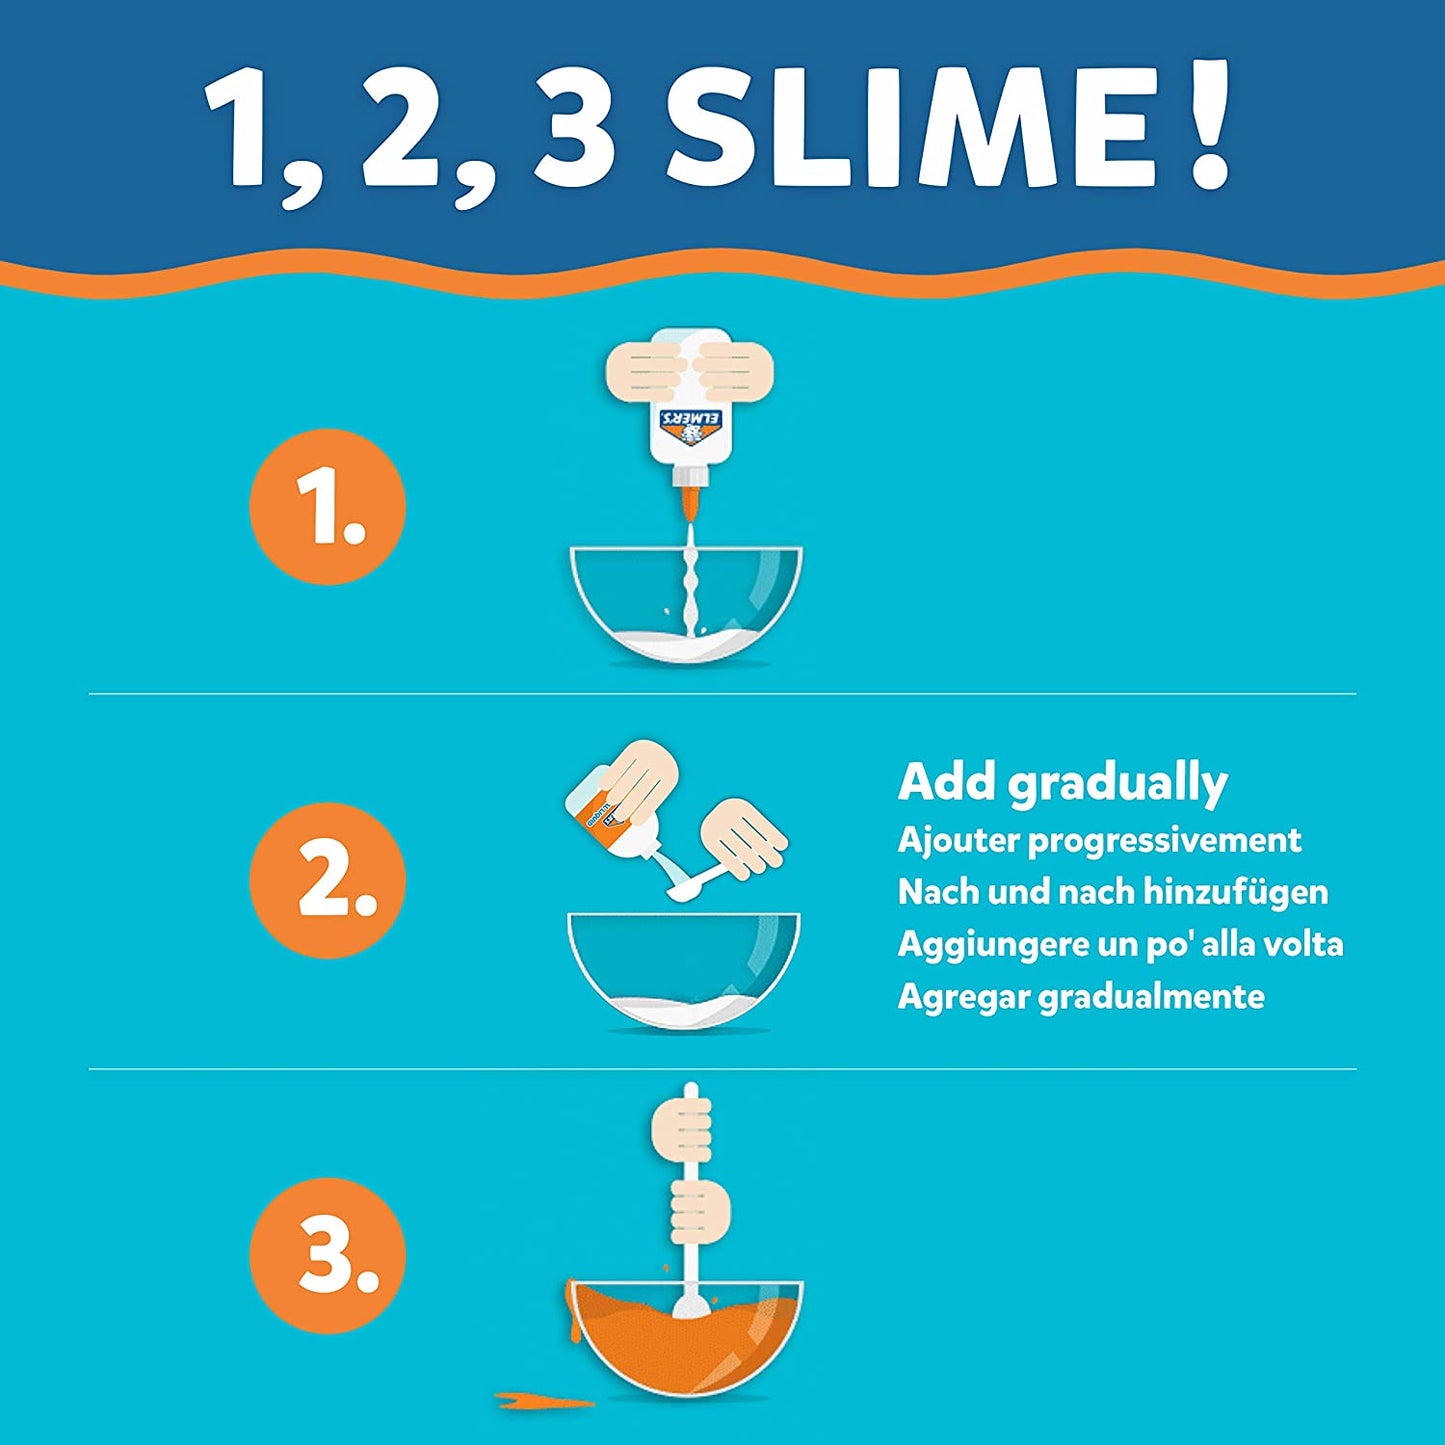 Elmer’s Metallic Slime Kit Include Metallic Glue with Magical Liquid Slime Activator || مجوعة صناعة السلايم الميتاليك السحري ماركة المرز